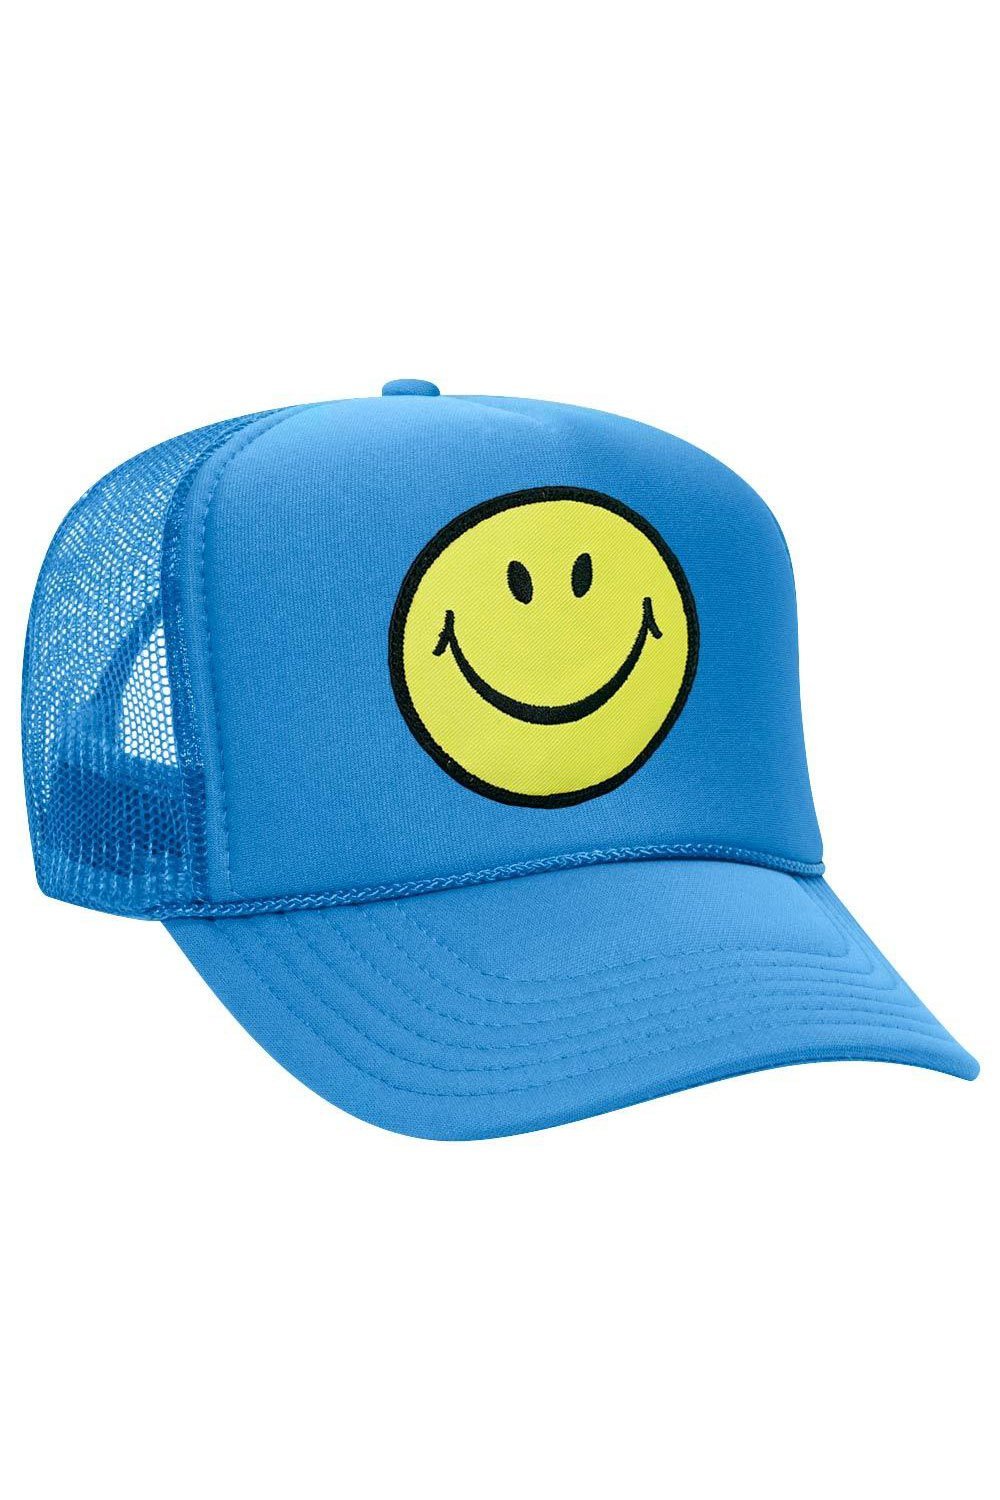 SMILEY VINTAGE TRUCKER HAT HATS Aviator Nation OS LIGHT BLUE 